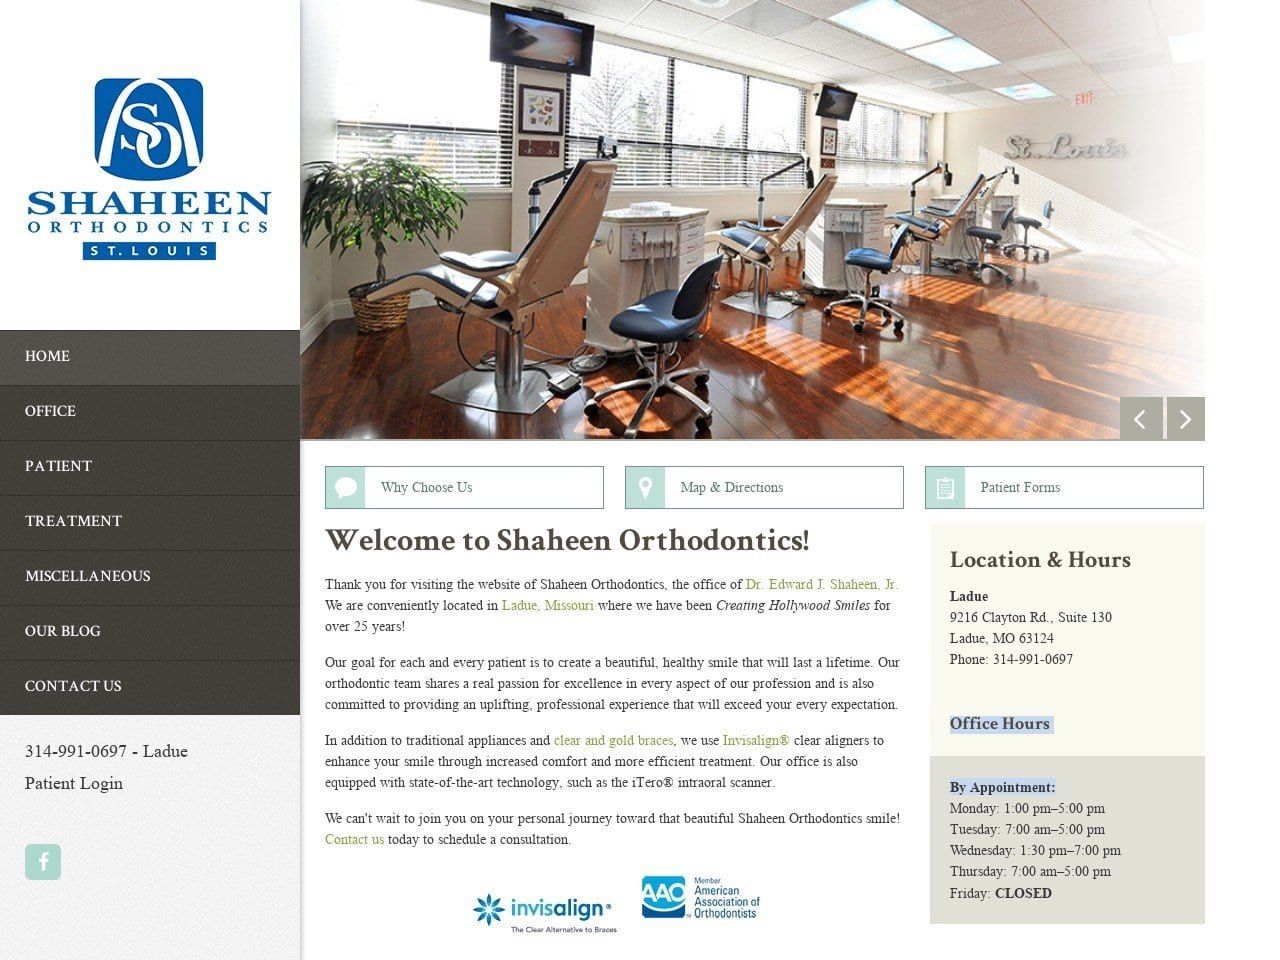 Shaheen Orthodontics Website Screenshot from shaheenorthodontics.com